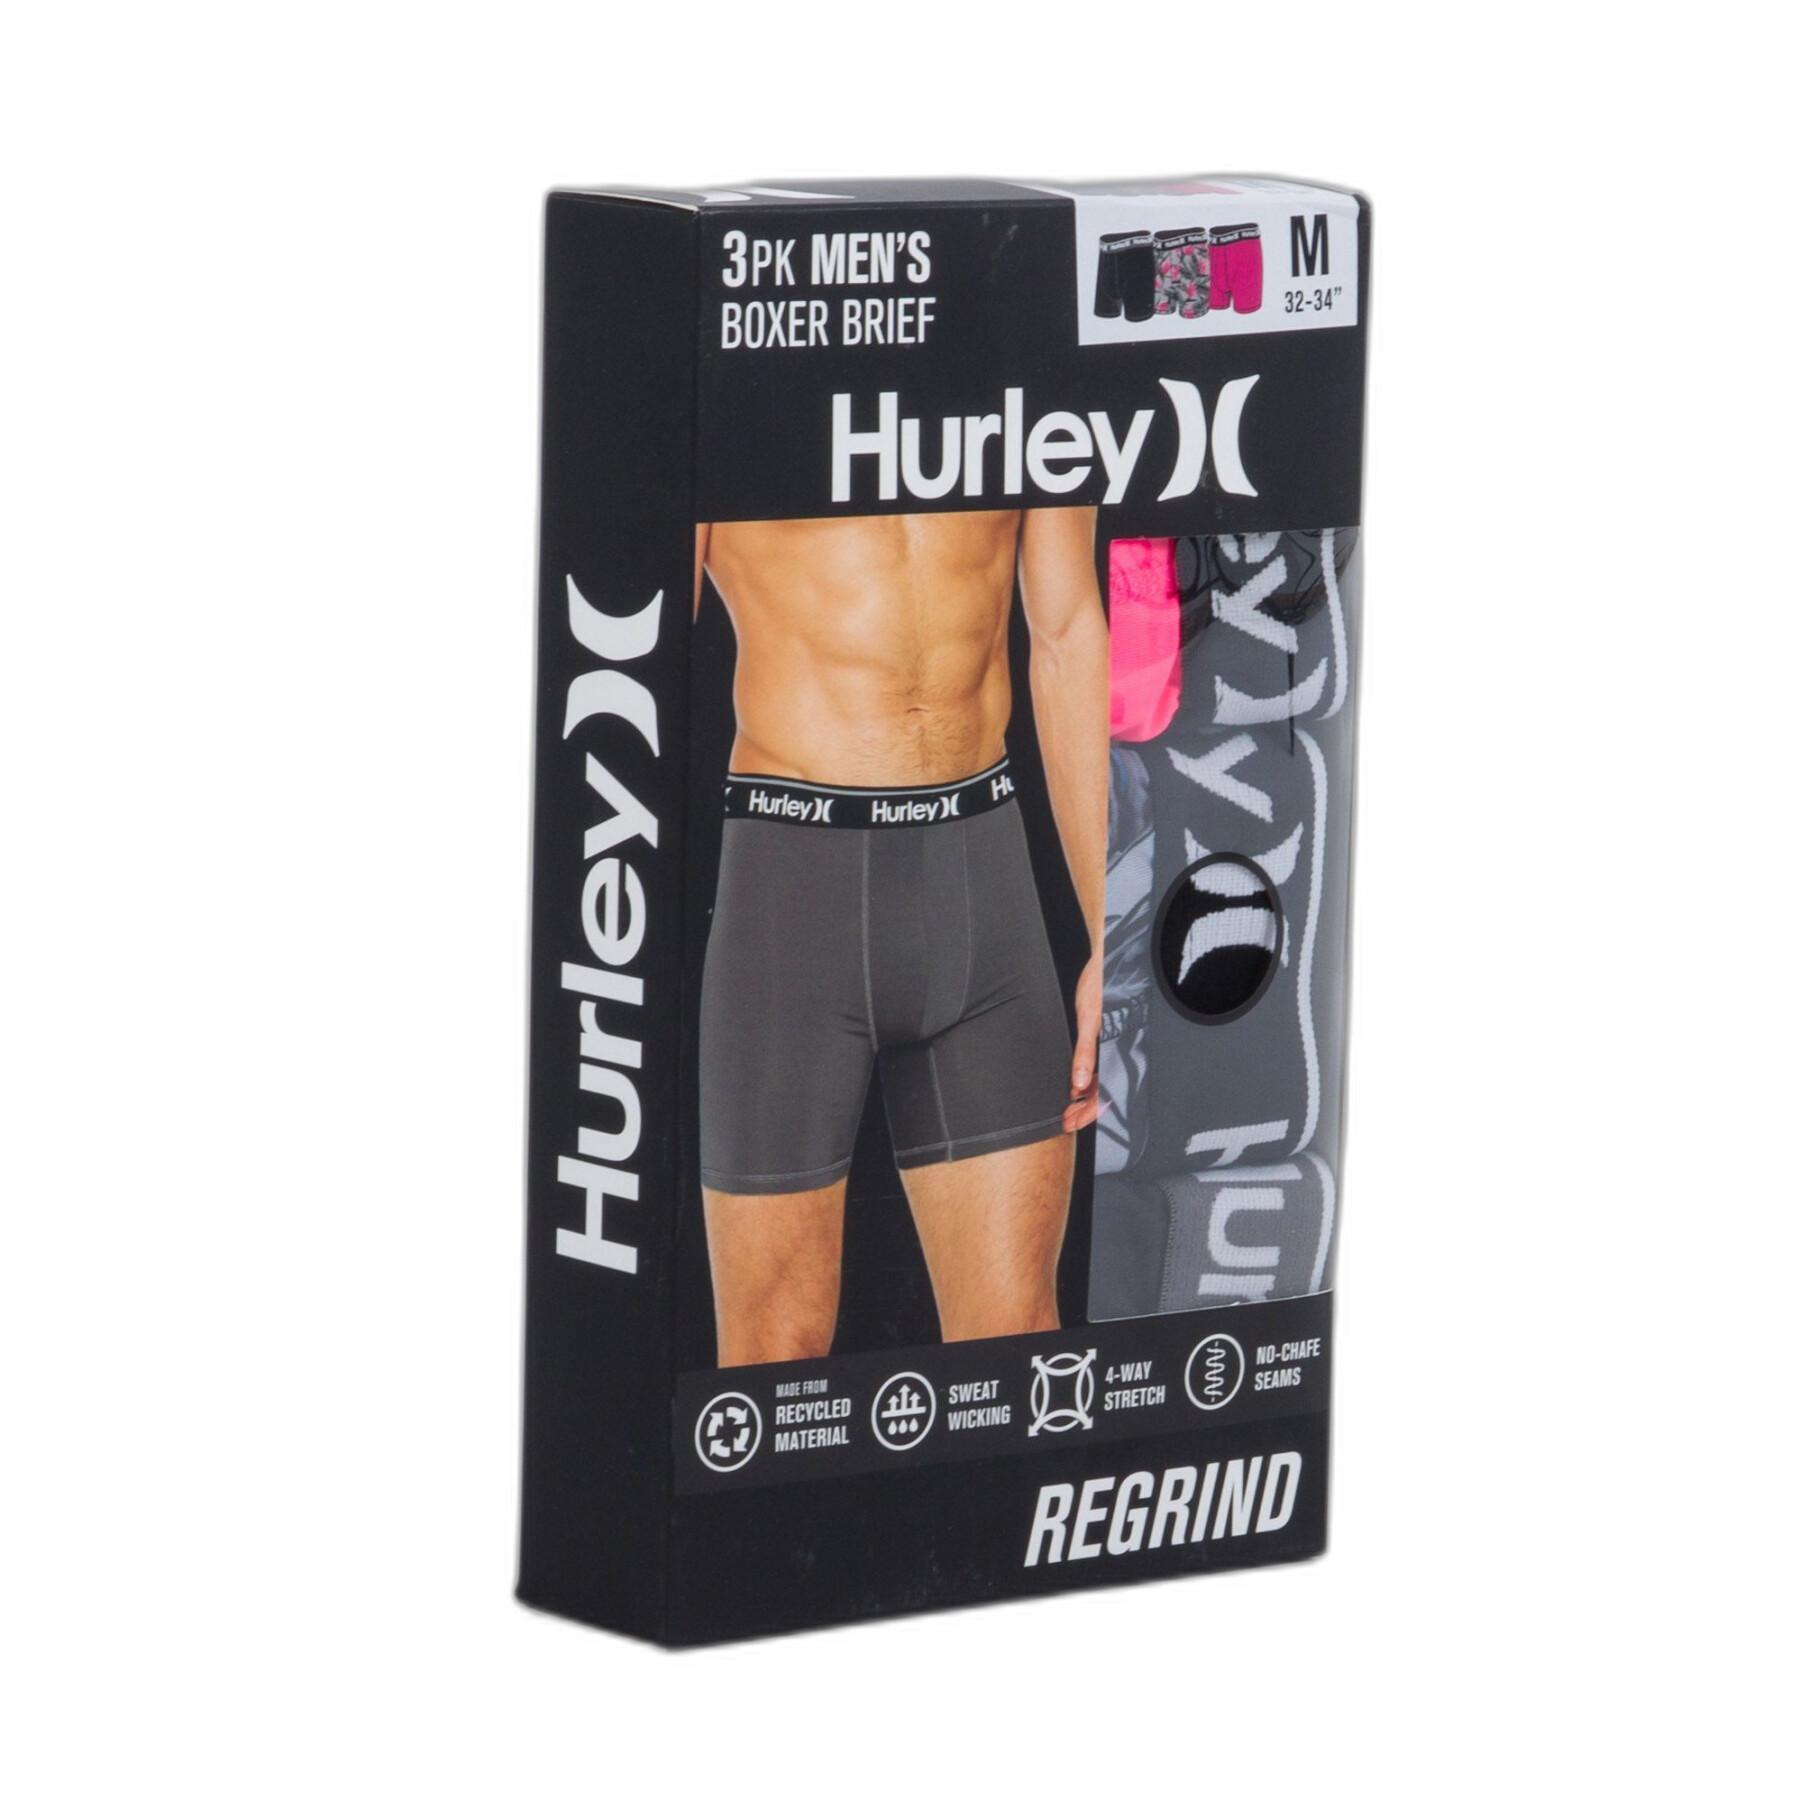 Conjunto de 3 calções de boxer Hurley Regrind